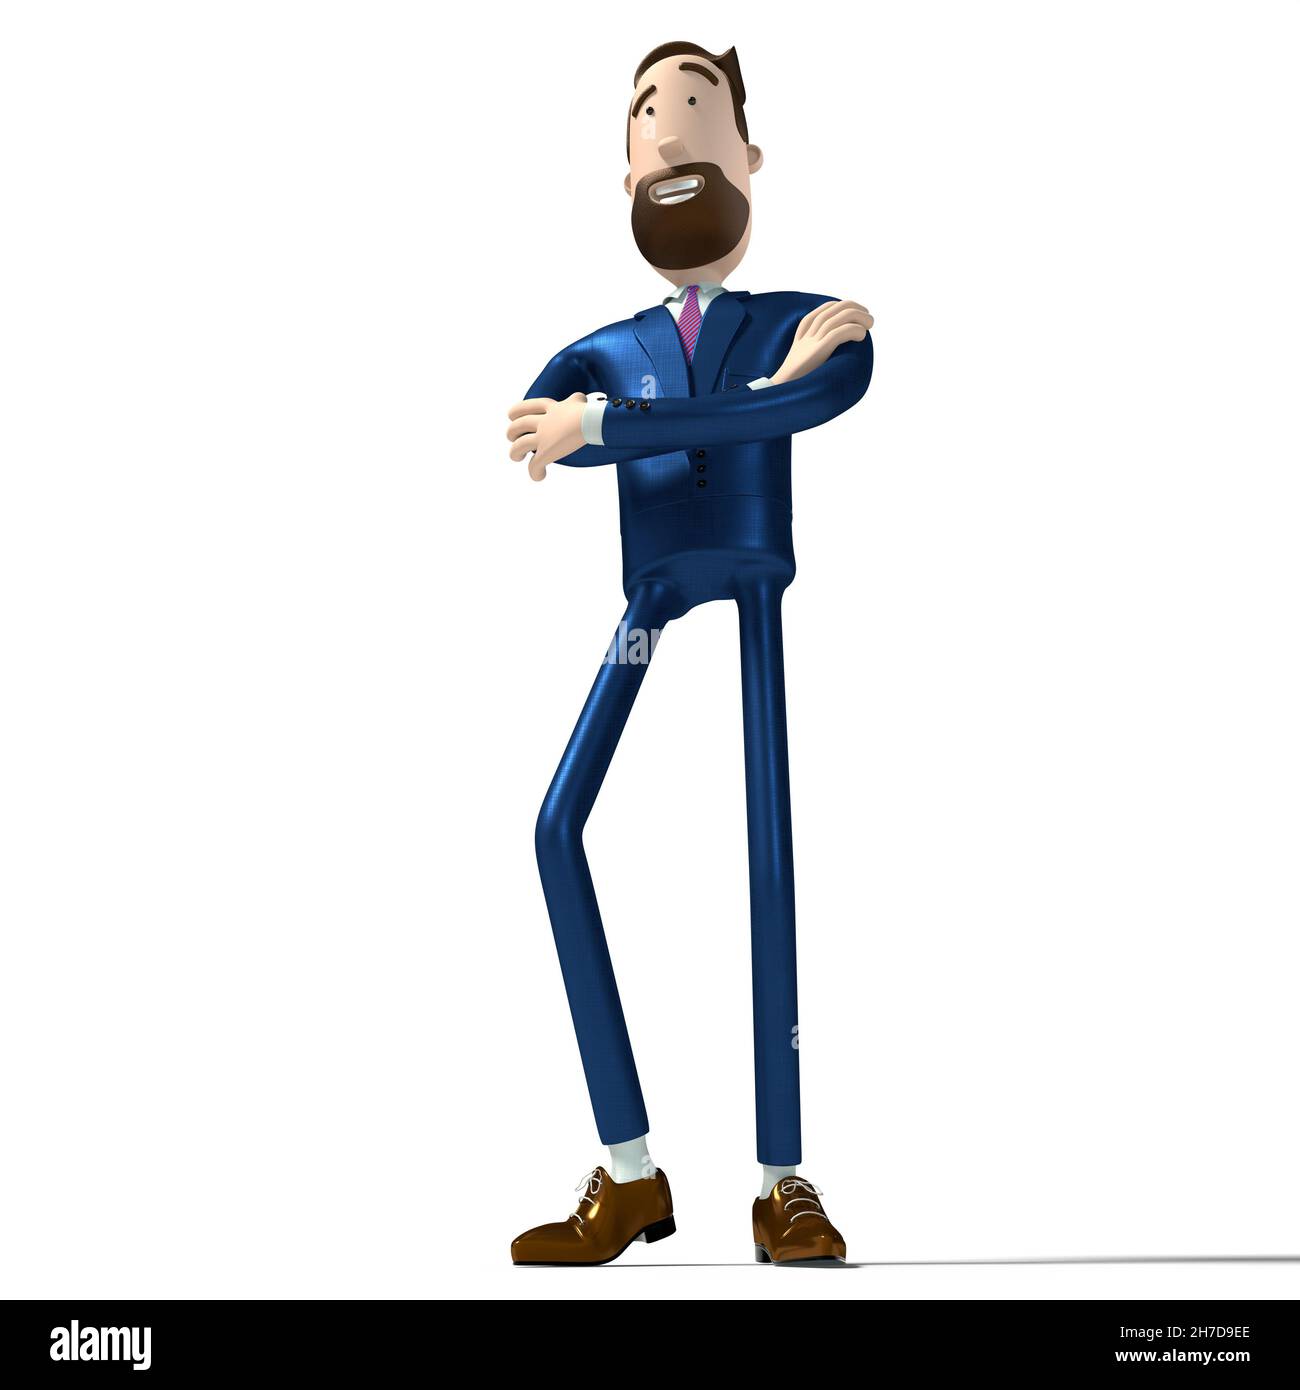 animated man standing